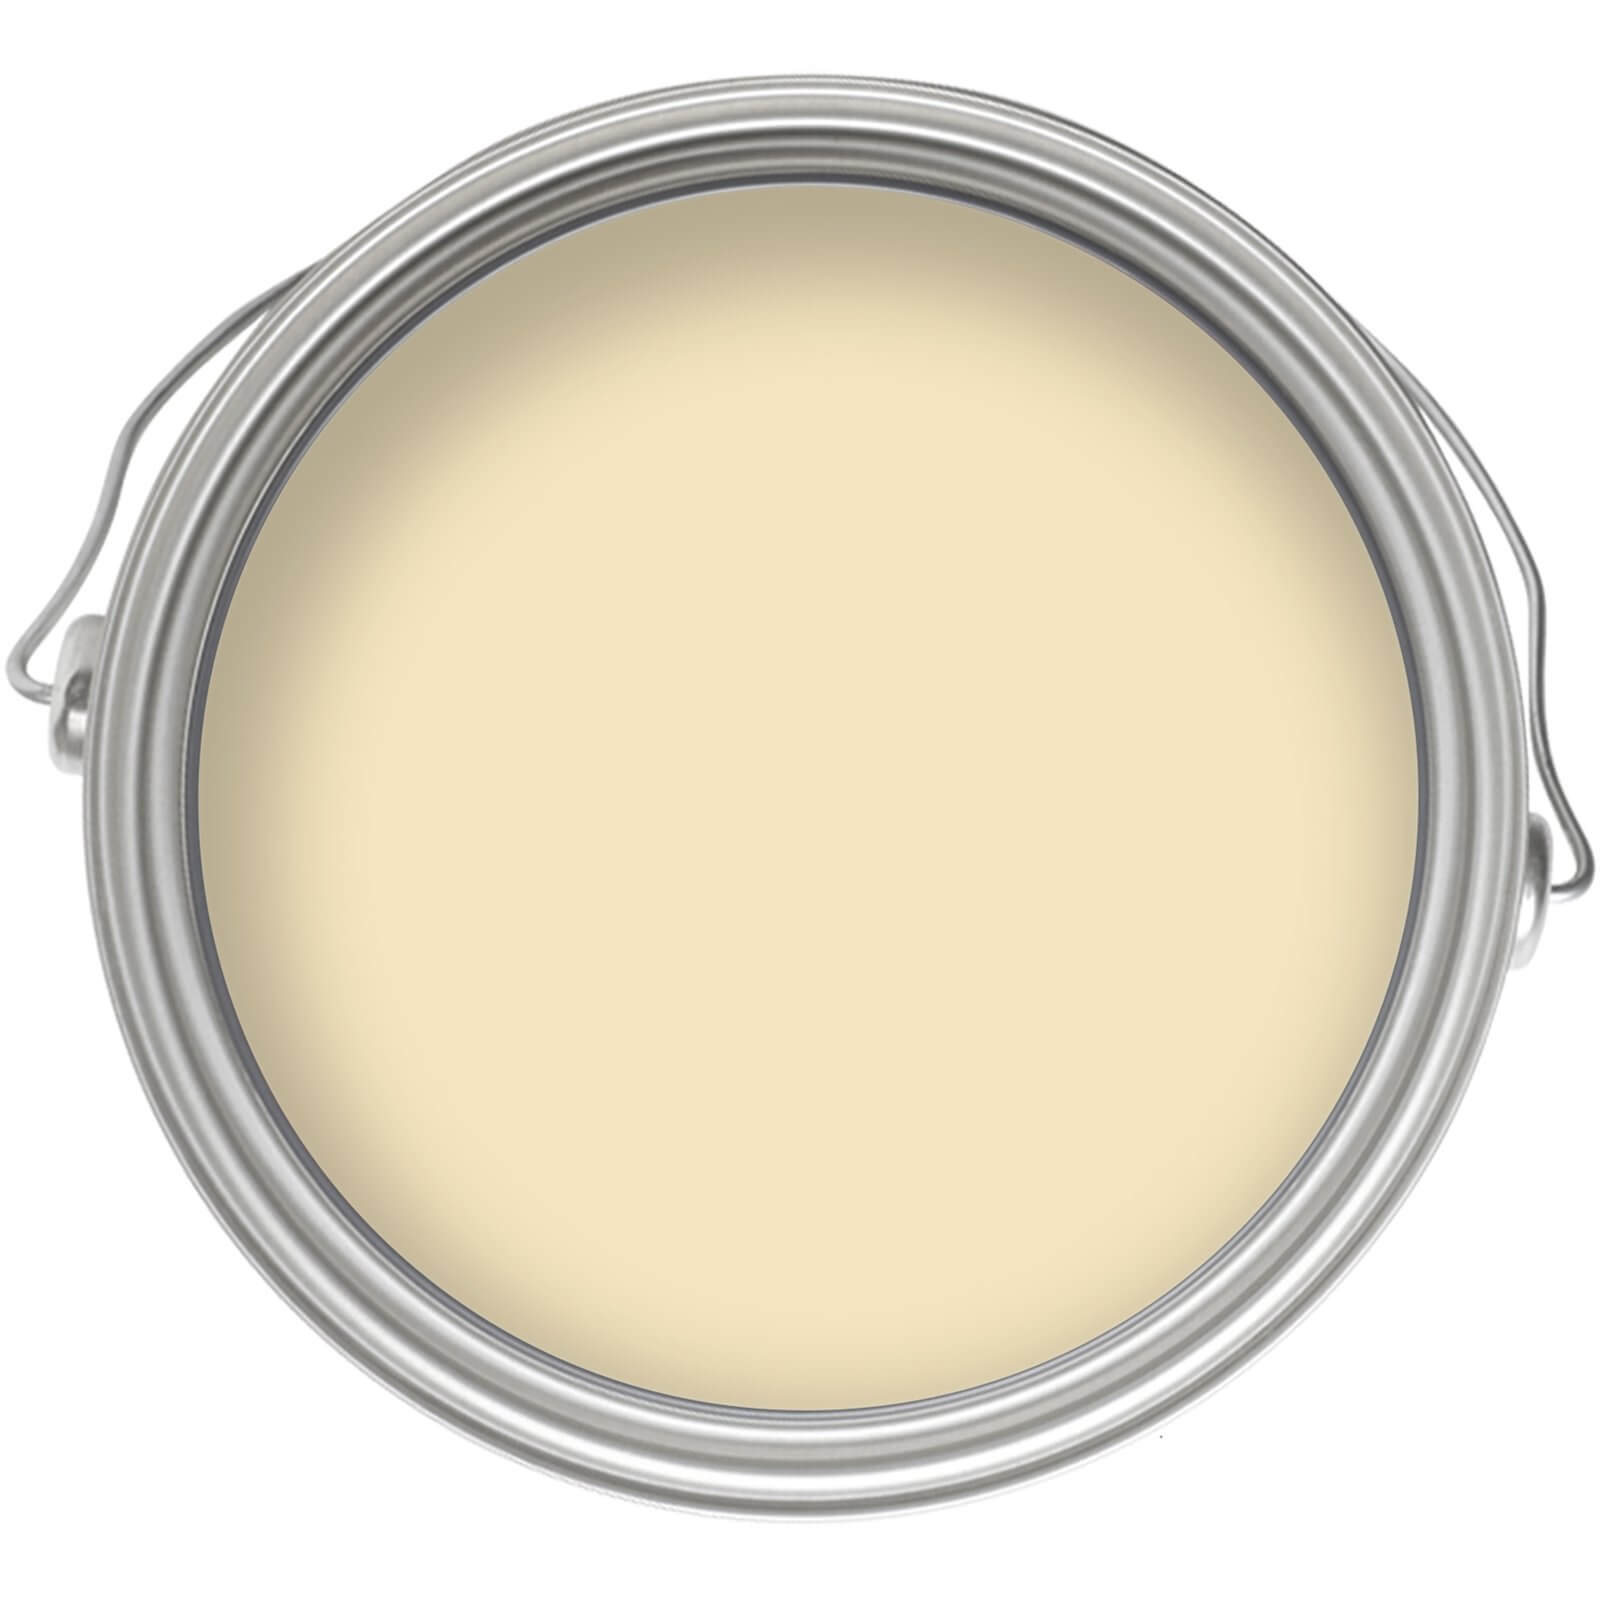 Homebase Smooth Masonry Paint - Cornish Cream 5L